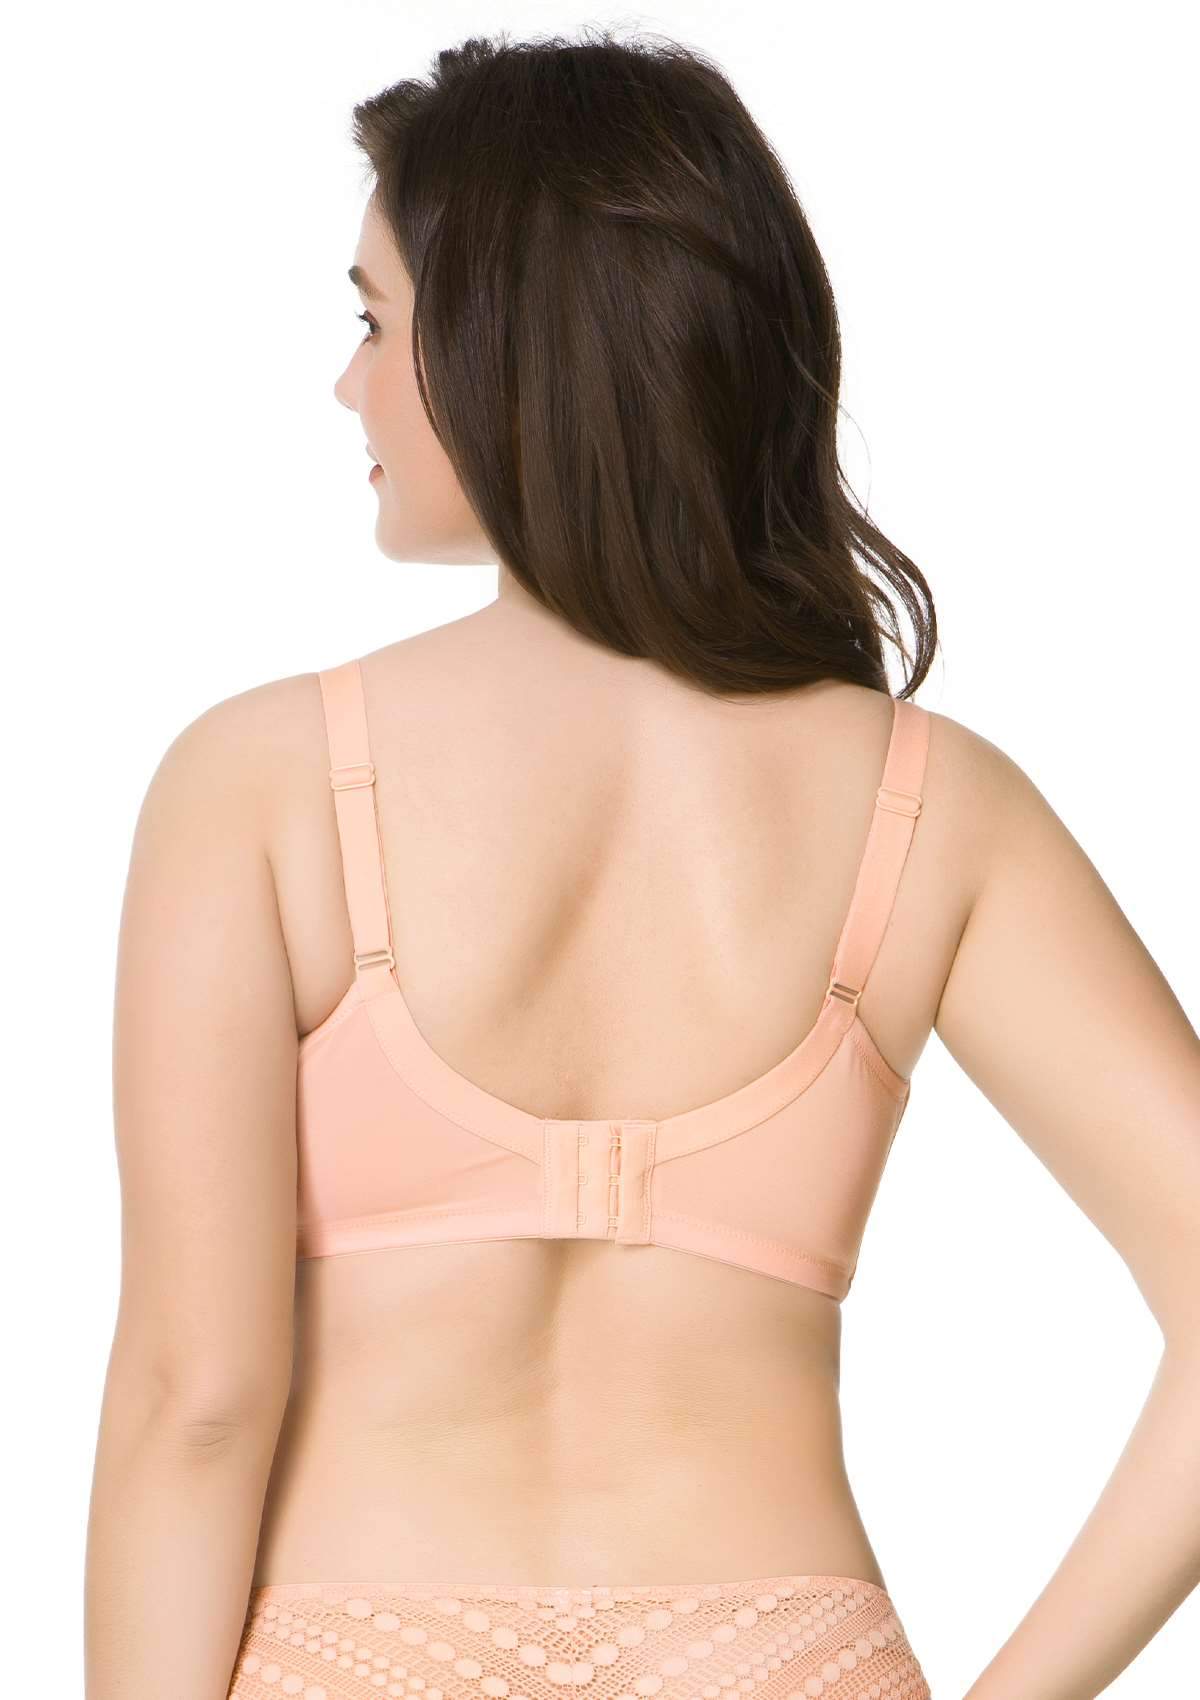 HSIA Heroine Lace Bra And Panty: Best Full Figure Minimizer Bra - Rose Cloud / 42 / D